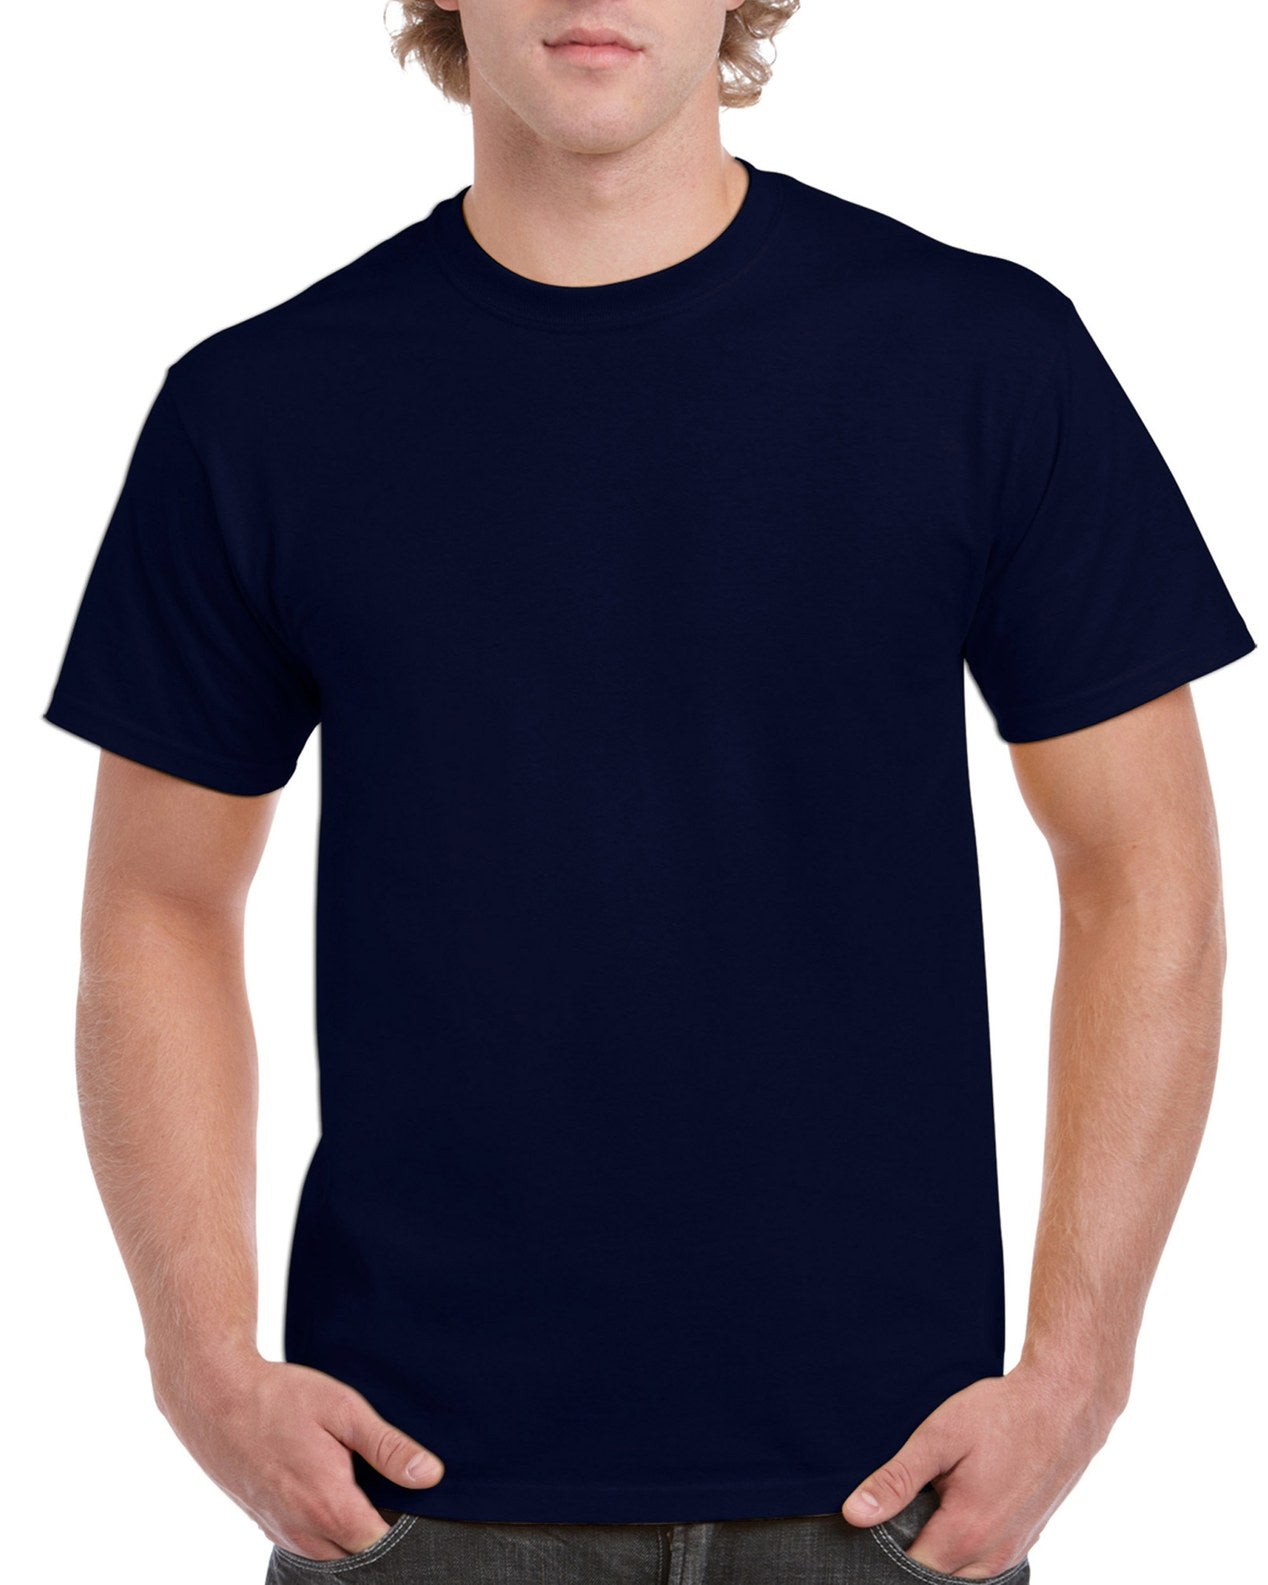 Custom Adult T-Shirt - otkworld